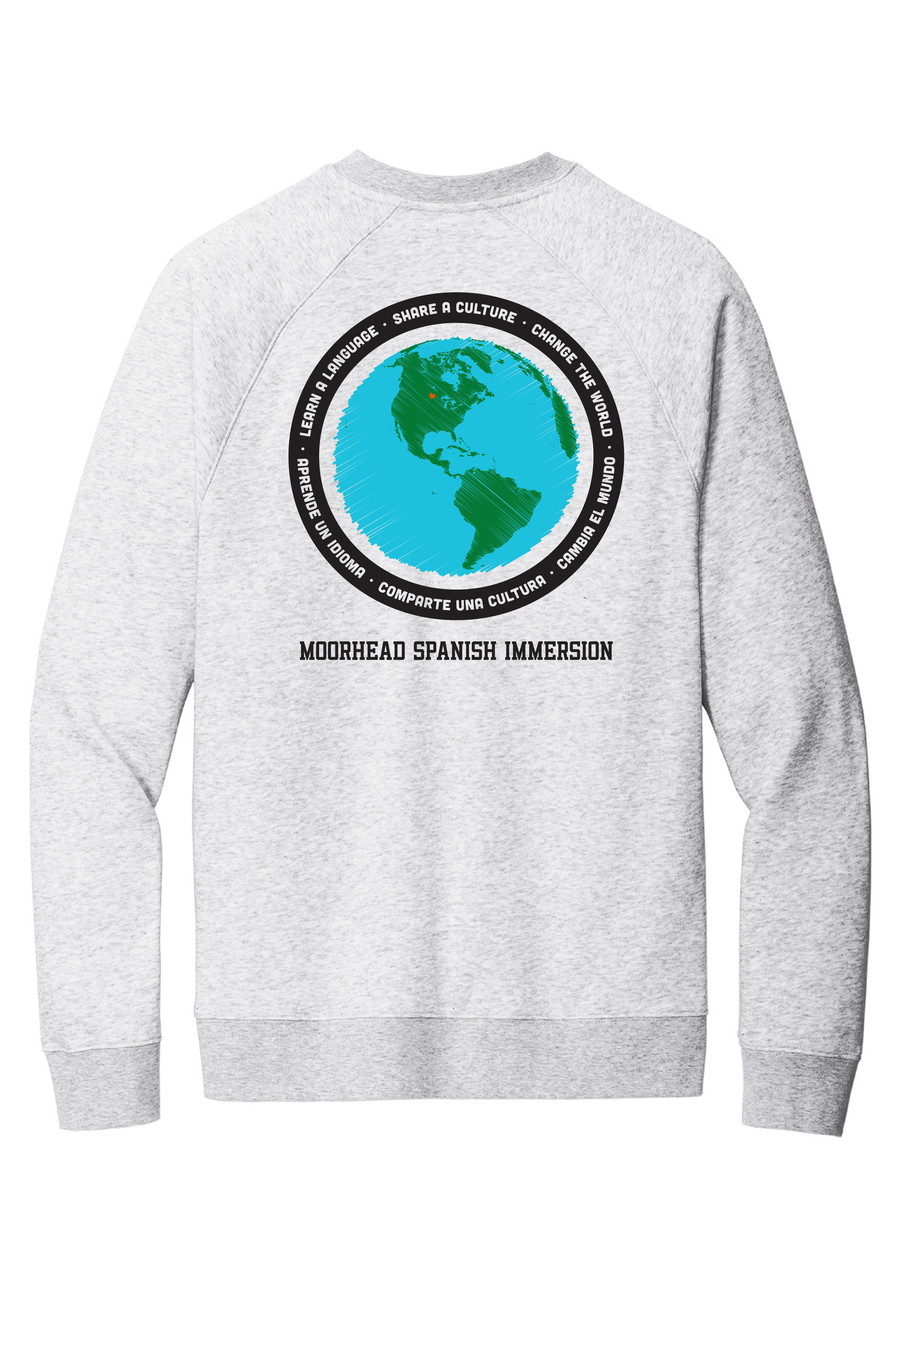 Moorhead Spanish Immersion SportTek Adult Crewneck Sweatshirt (Preorder)